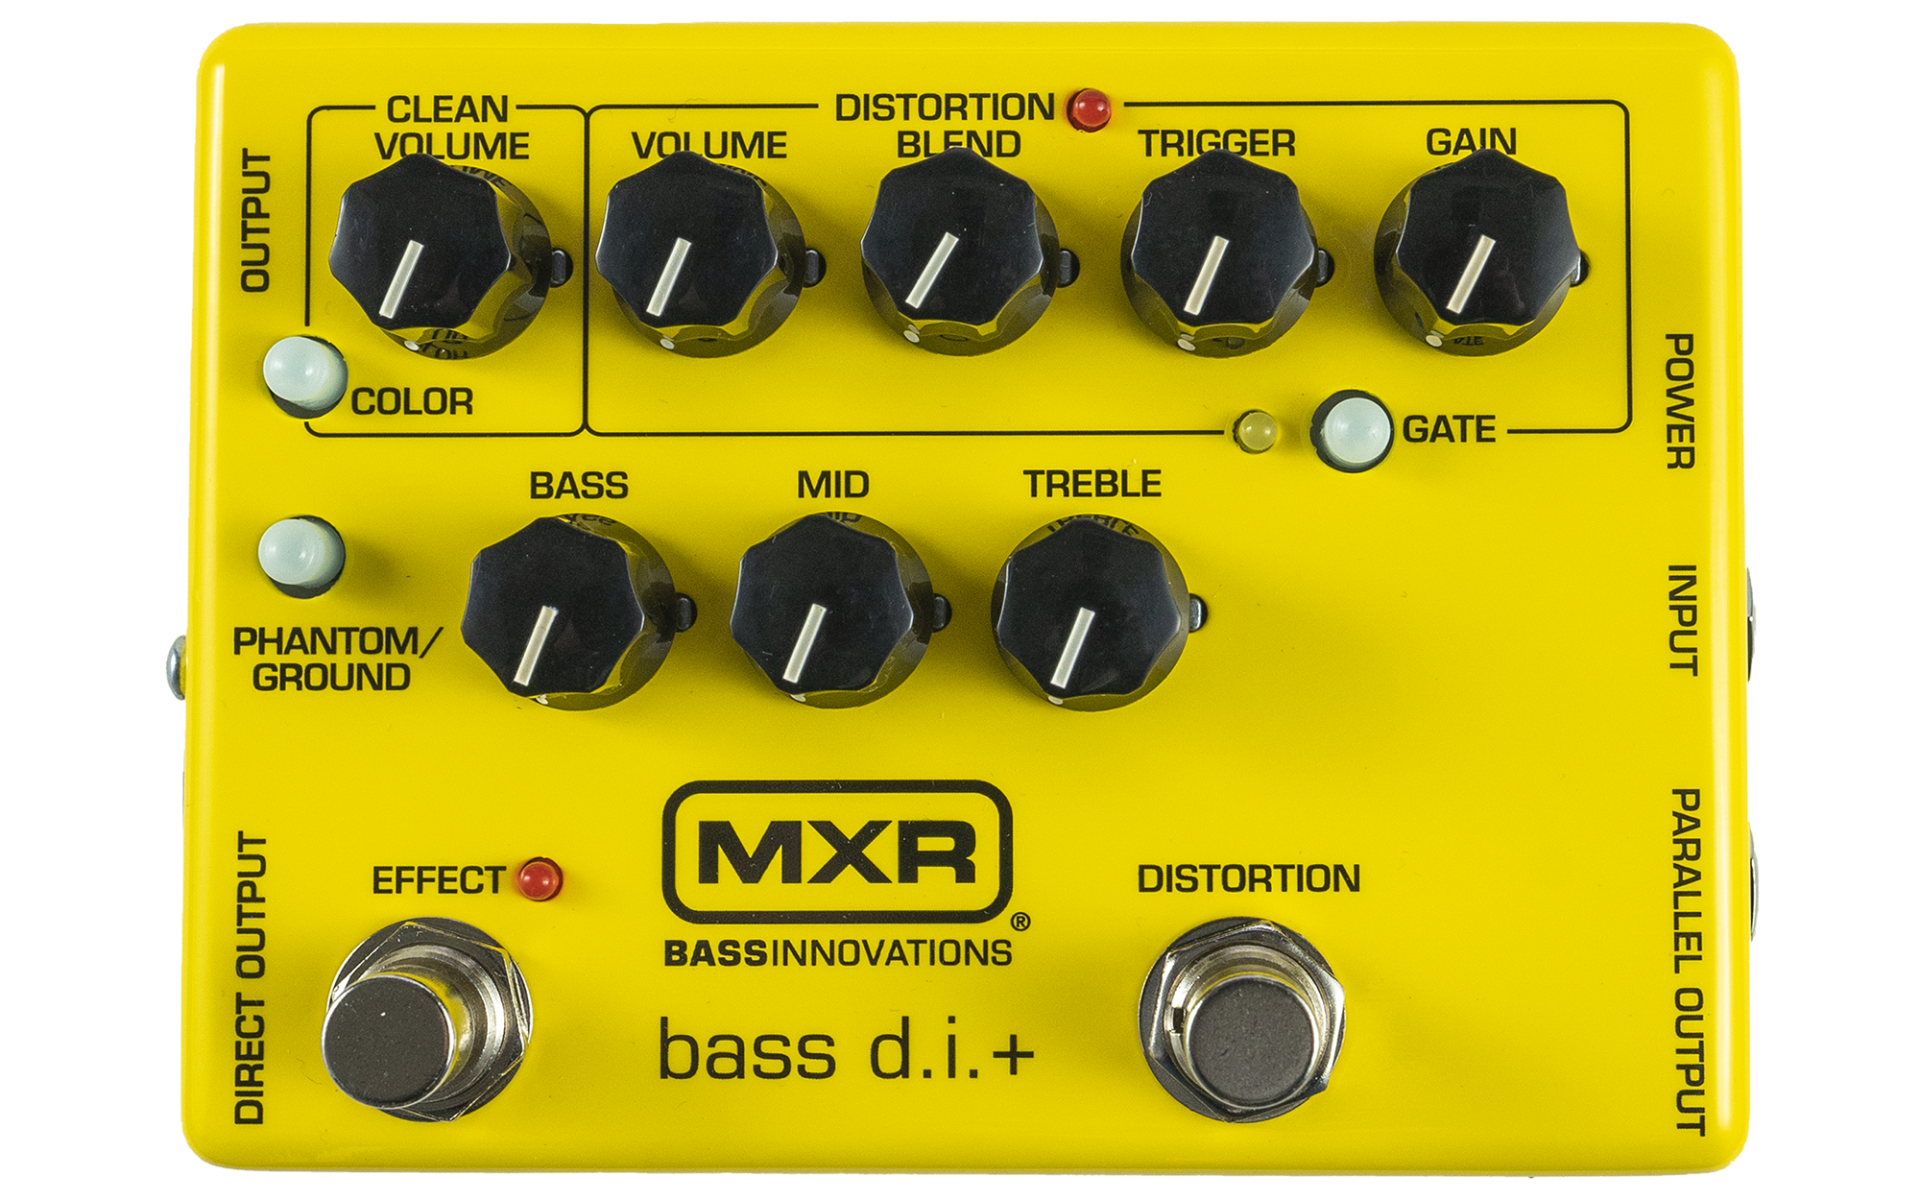 MXR】ベーシストの圧倒的大定番エフェクター『M80 Bass D.I.+』の 